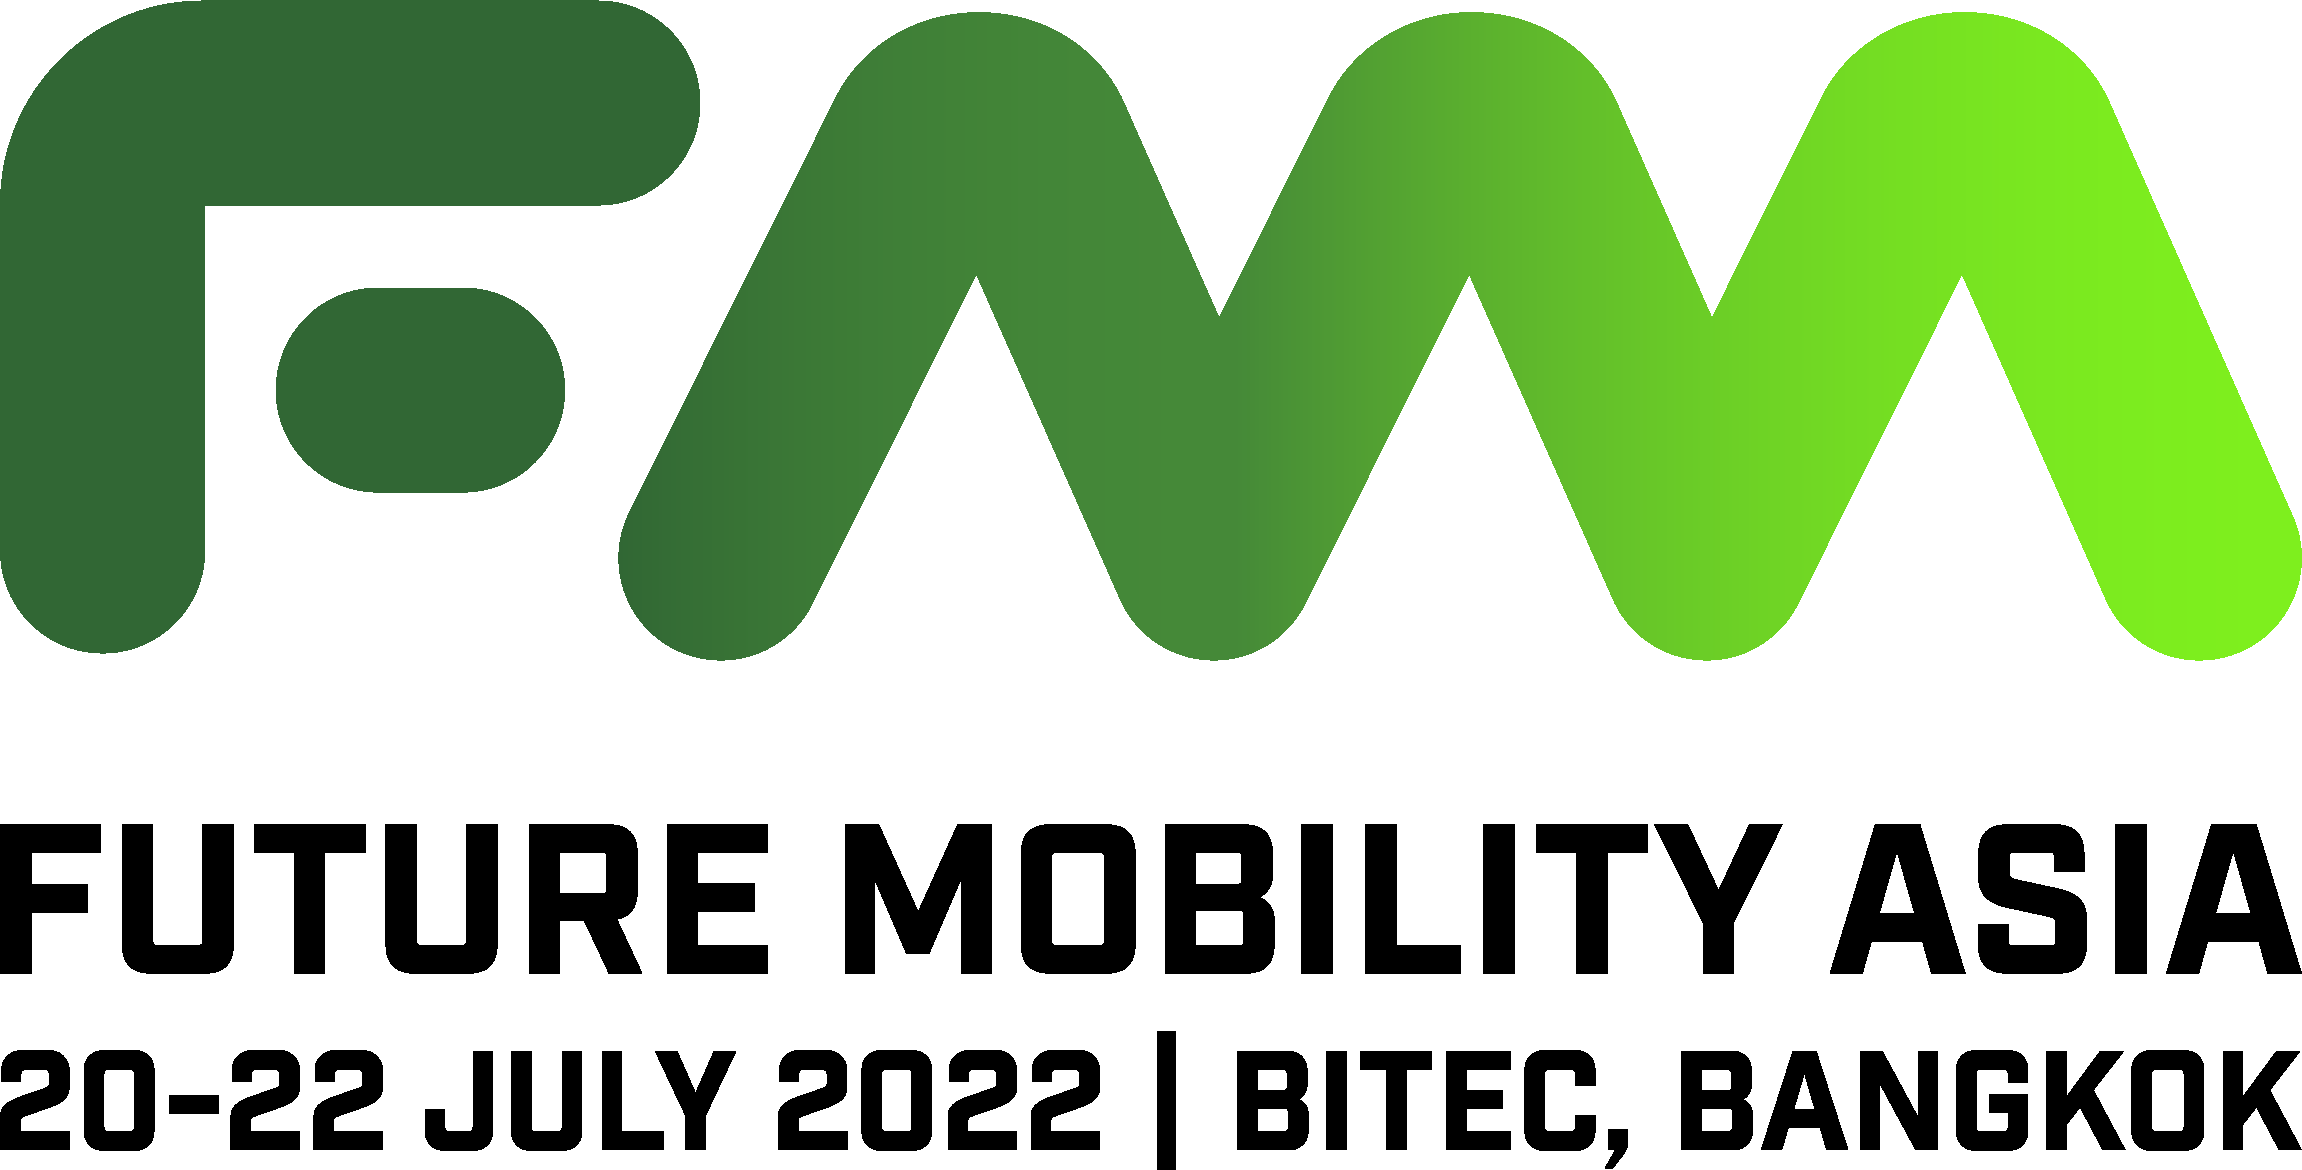 Fma Logo V1